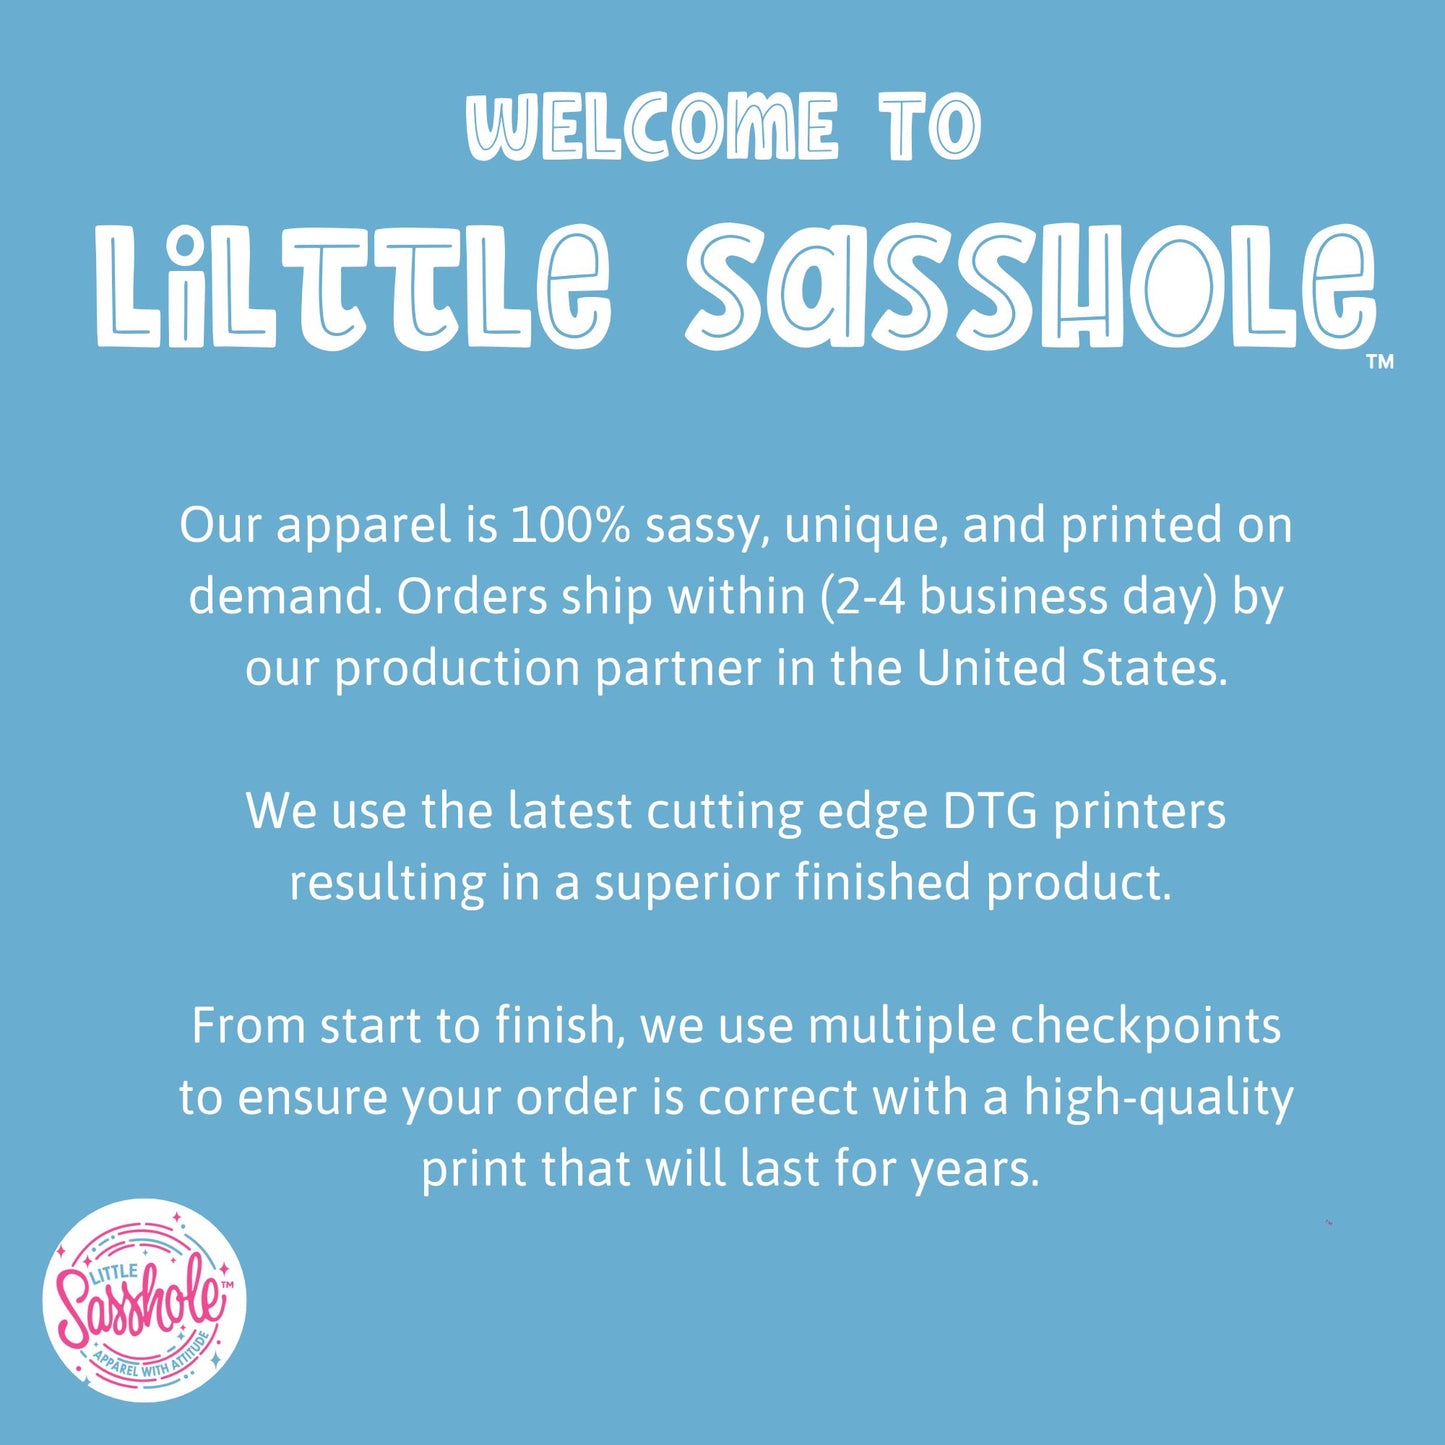 Cute Confidence: Little Sasshole™ Toddler Girl's Tee